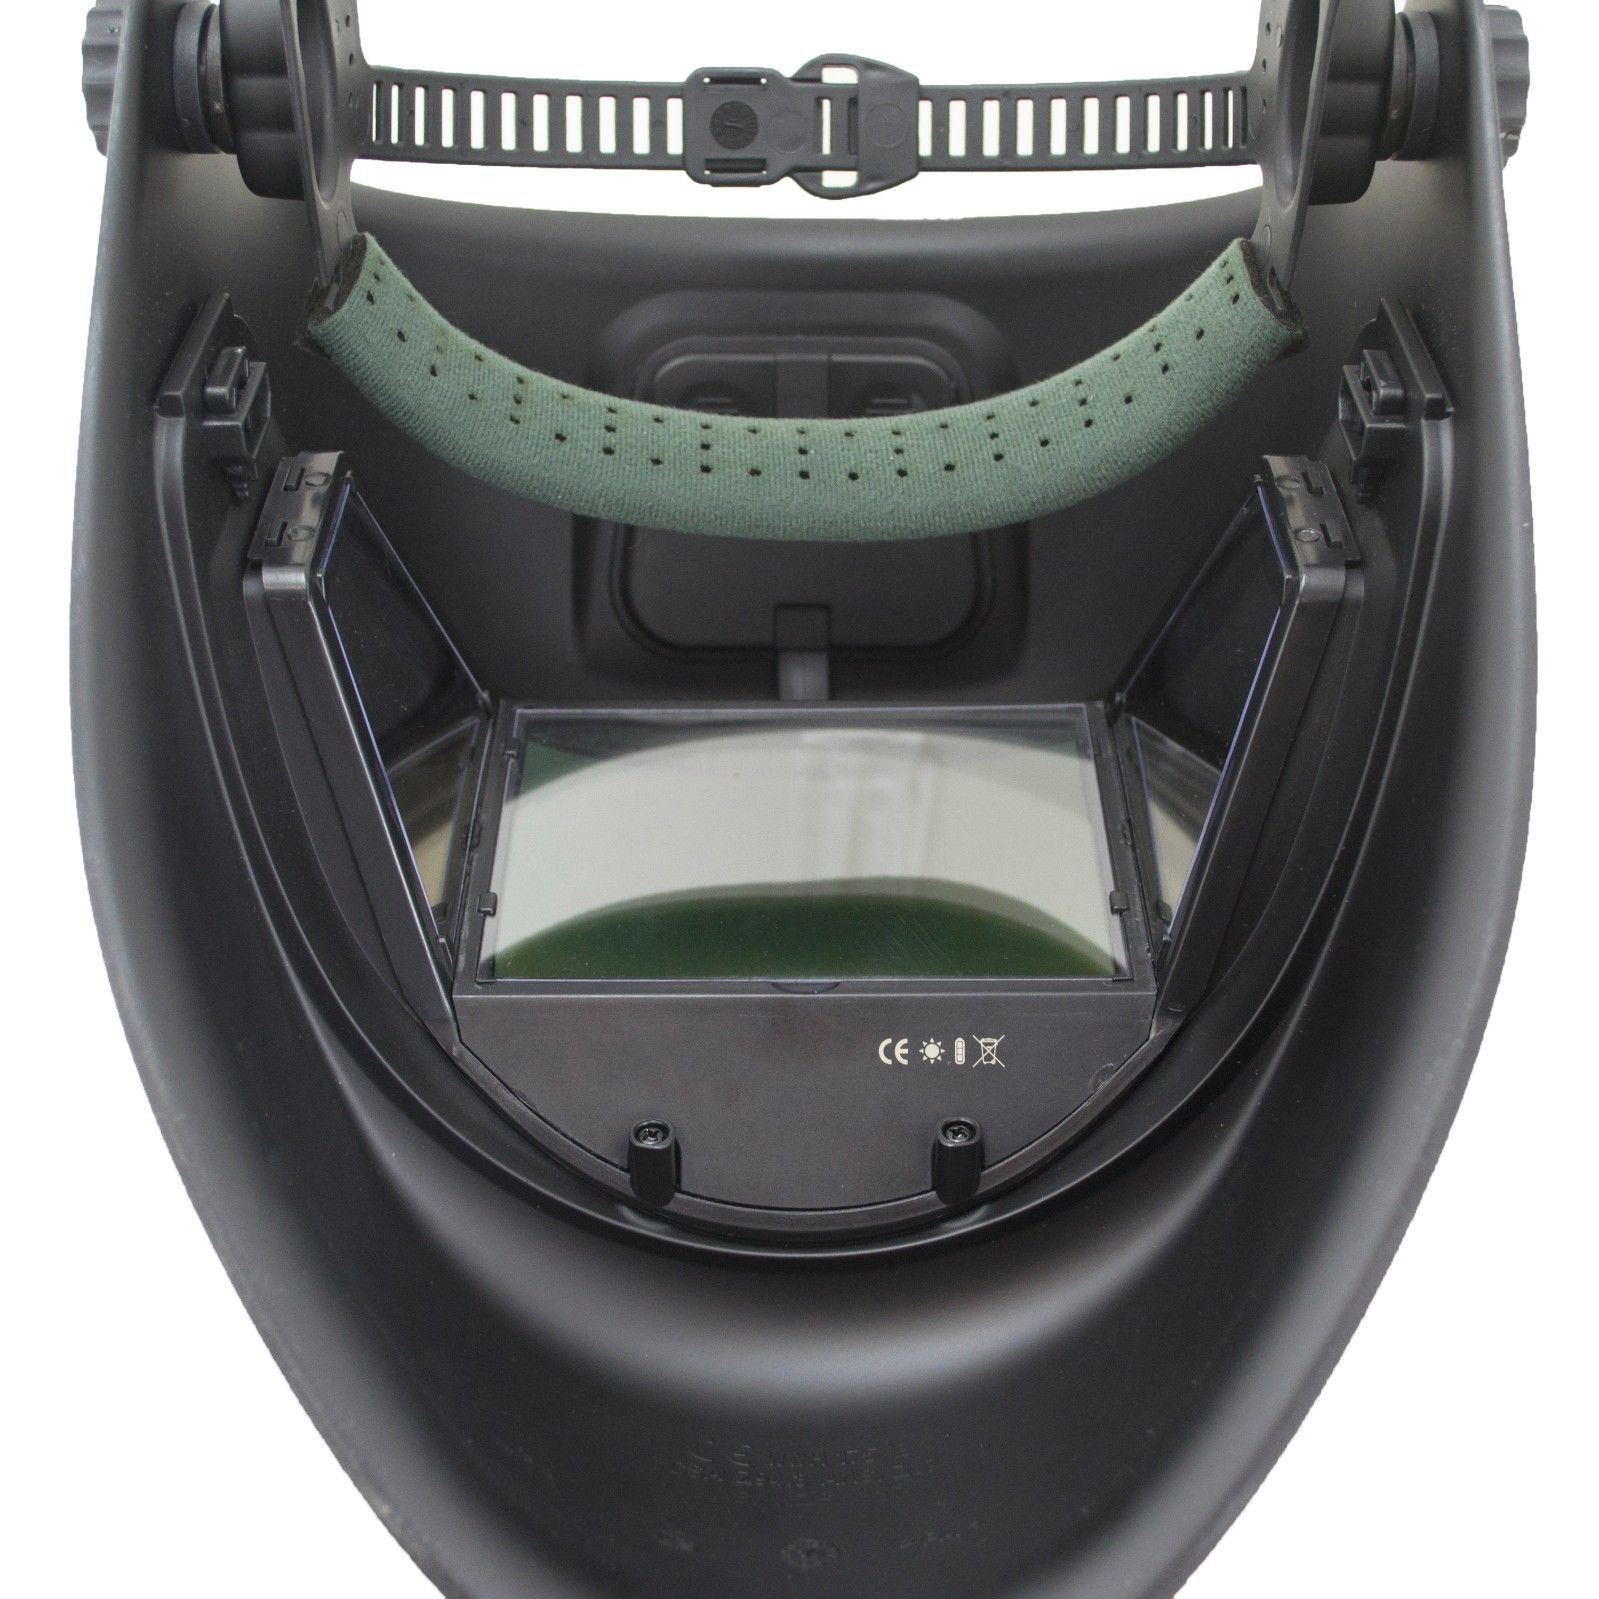 TGR Panoramic 180 View Solar Powered Auto Darkening Welding Helmet - True Color (Matte Carbon Fiber)